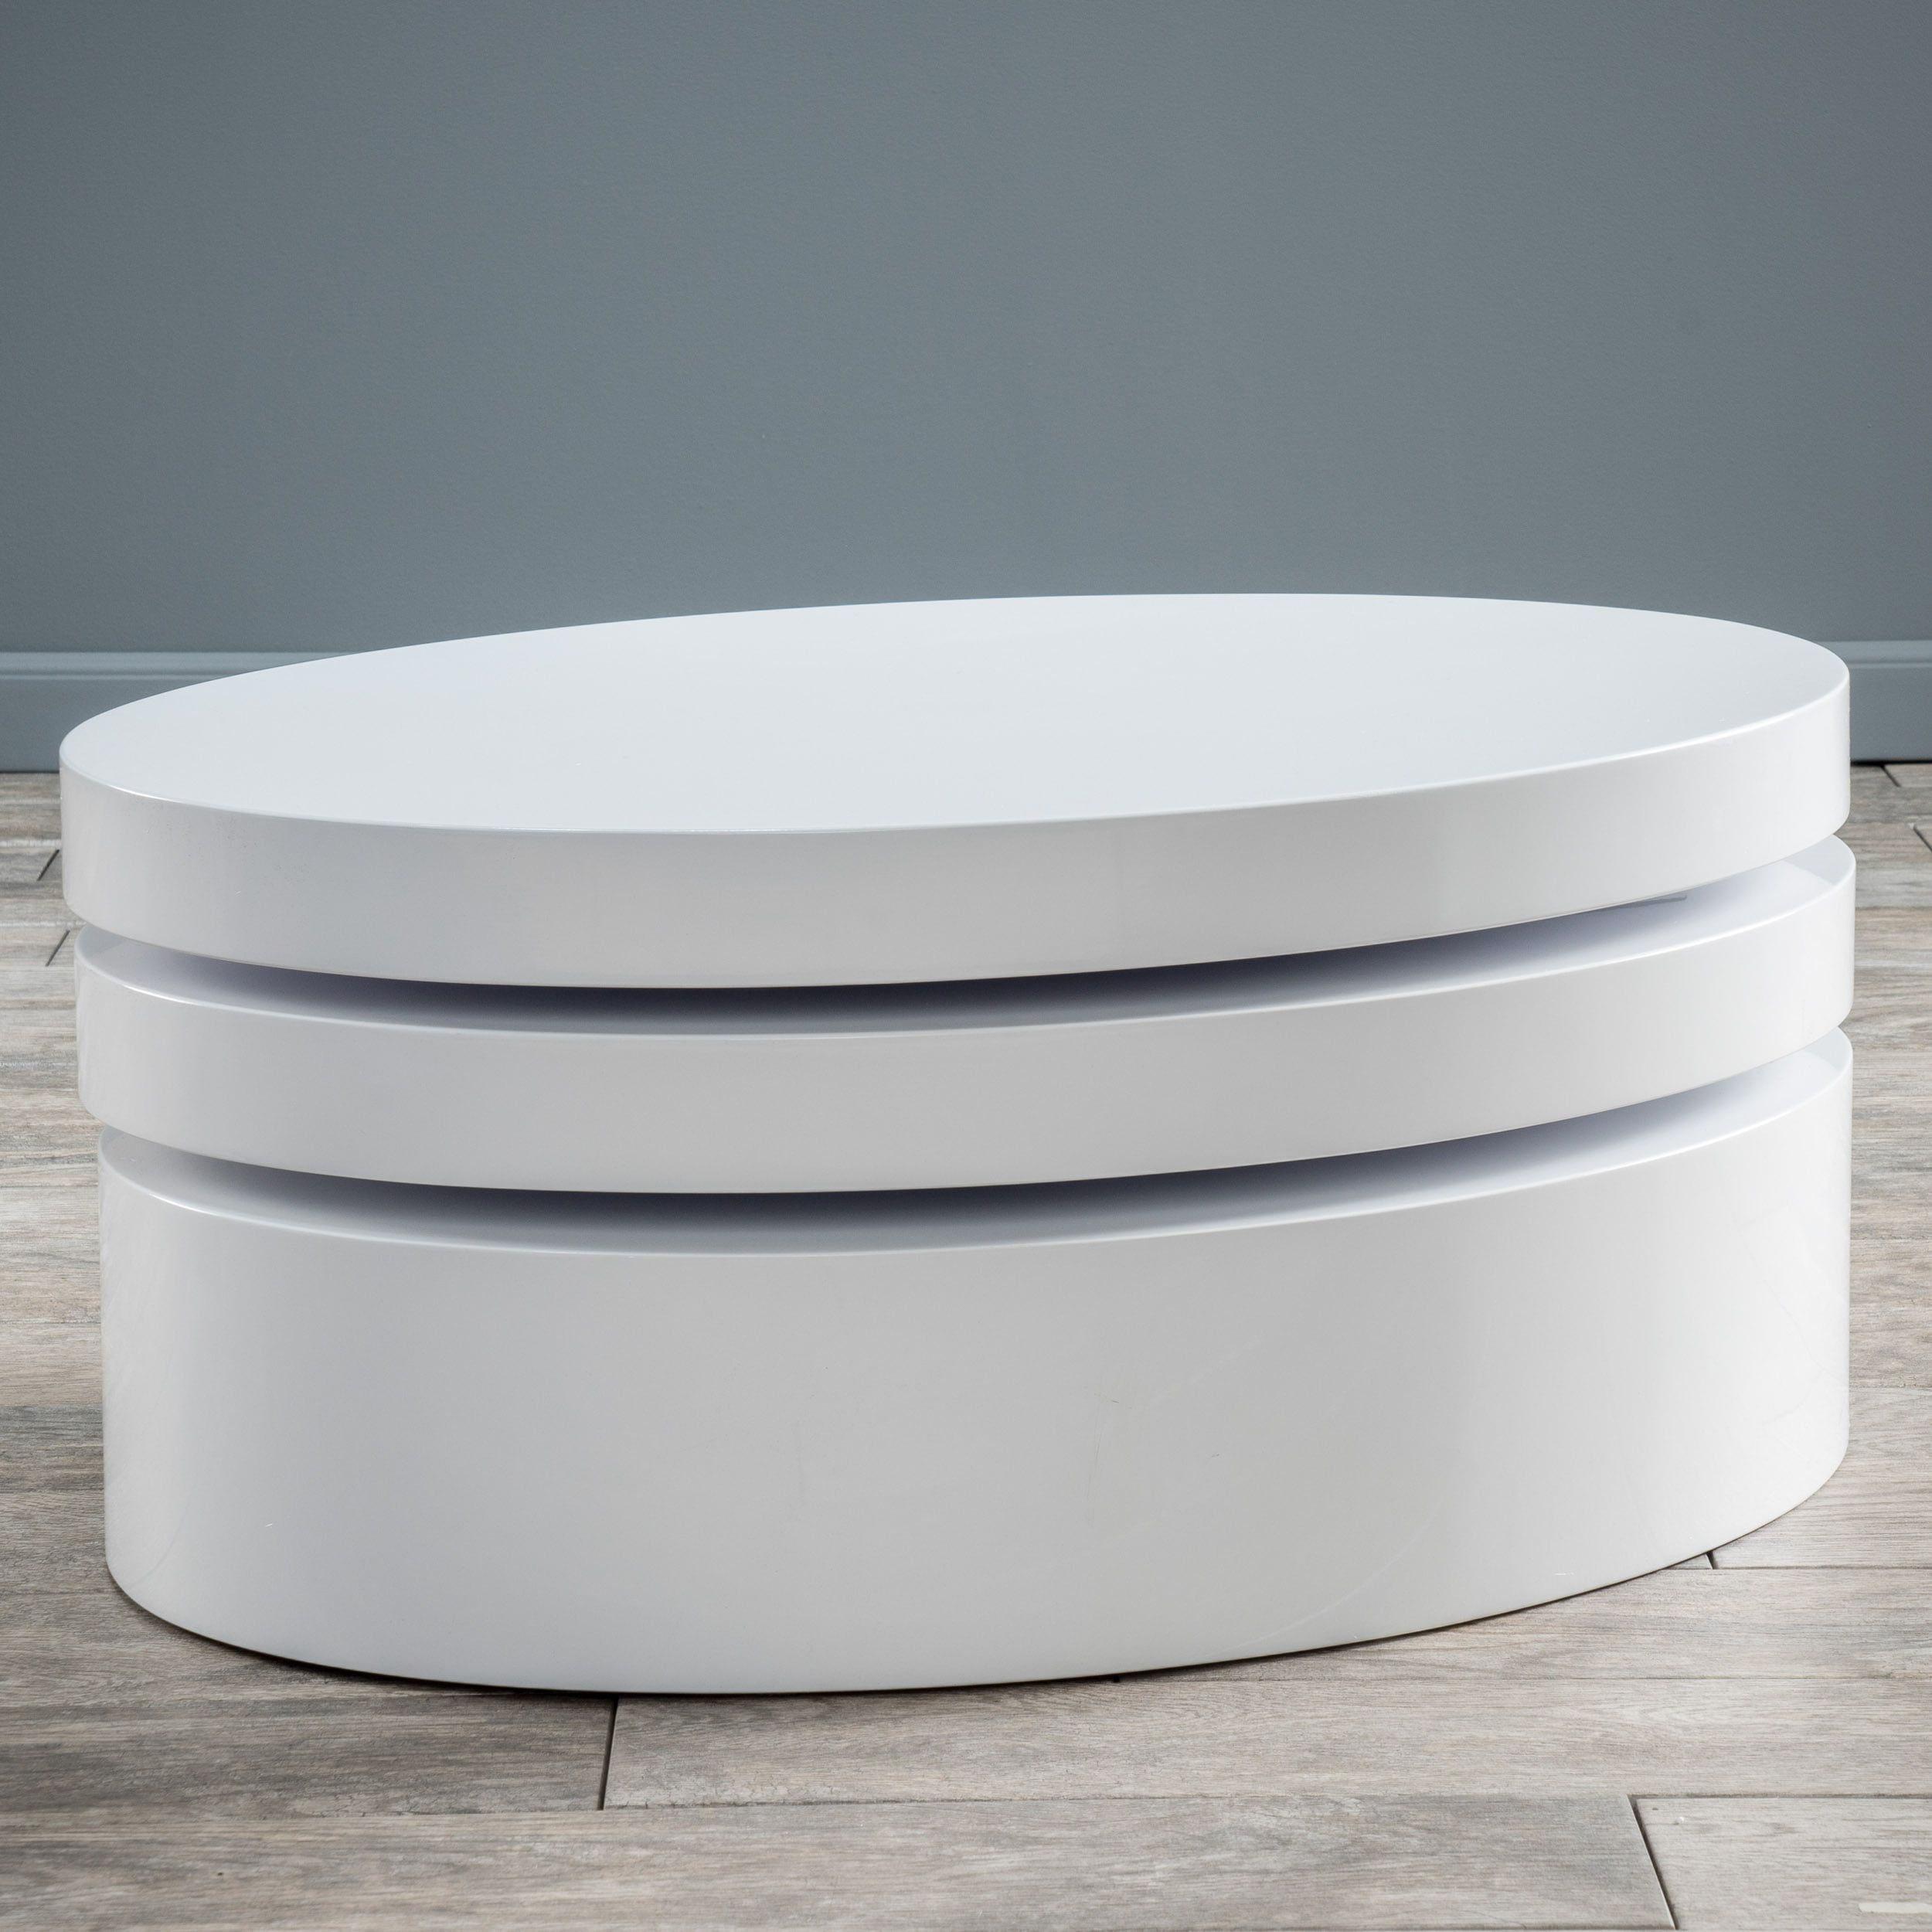 Lagom Small Oval Mod Rotatable Coffee Table – Walmart For Oval Mod Rotating Coffee Tables (View 11 of 20)